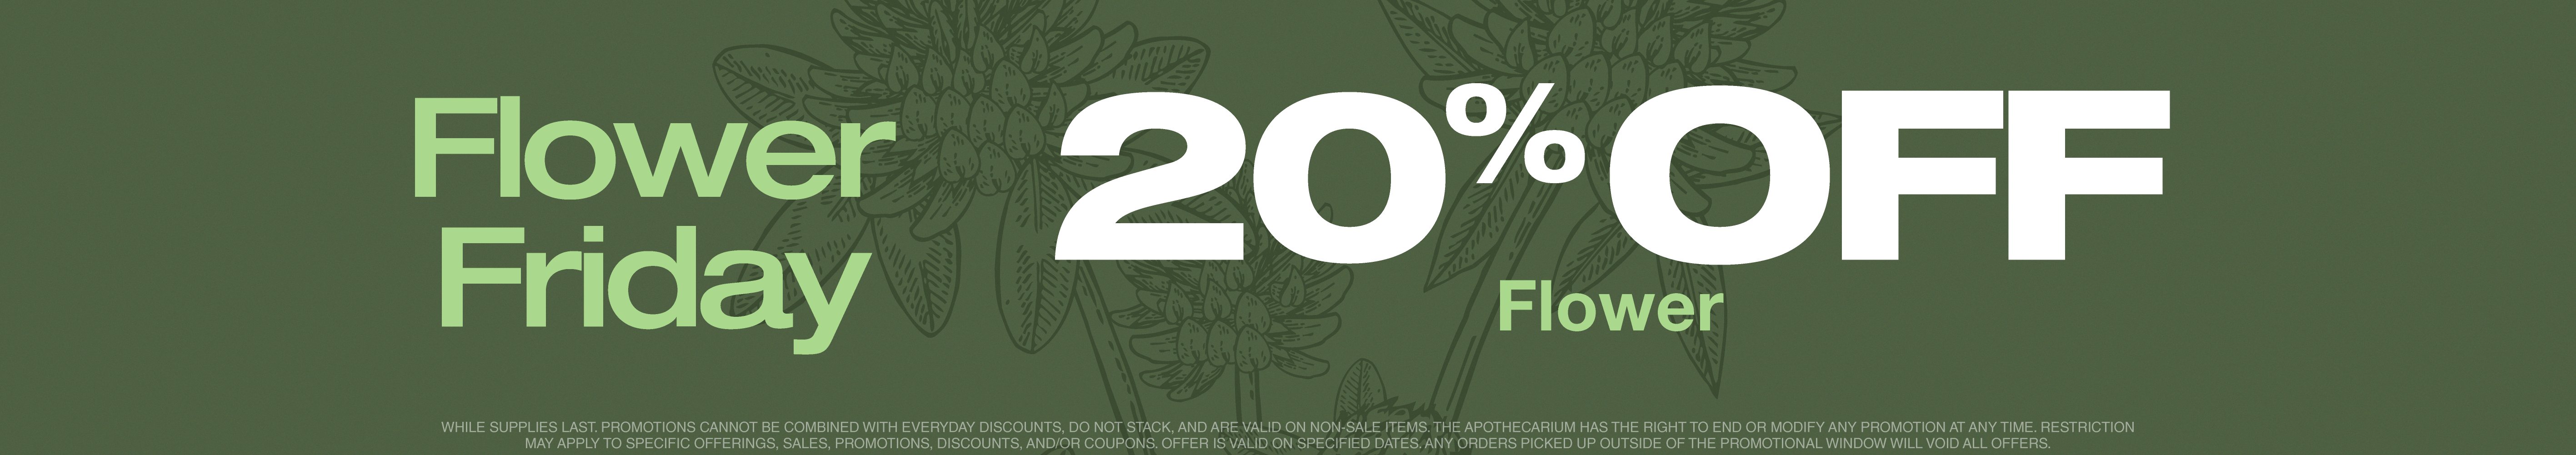 Cannabis Promo, Cannabis Sales, Cannabis Discounts, Cannabis on Sale, Flower Friday